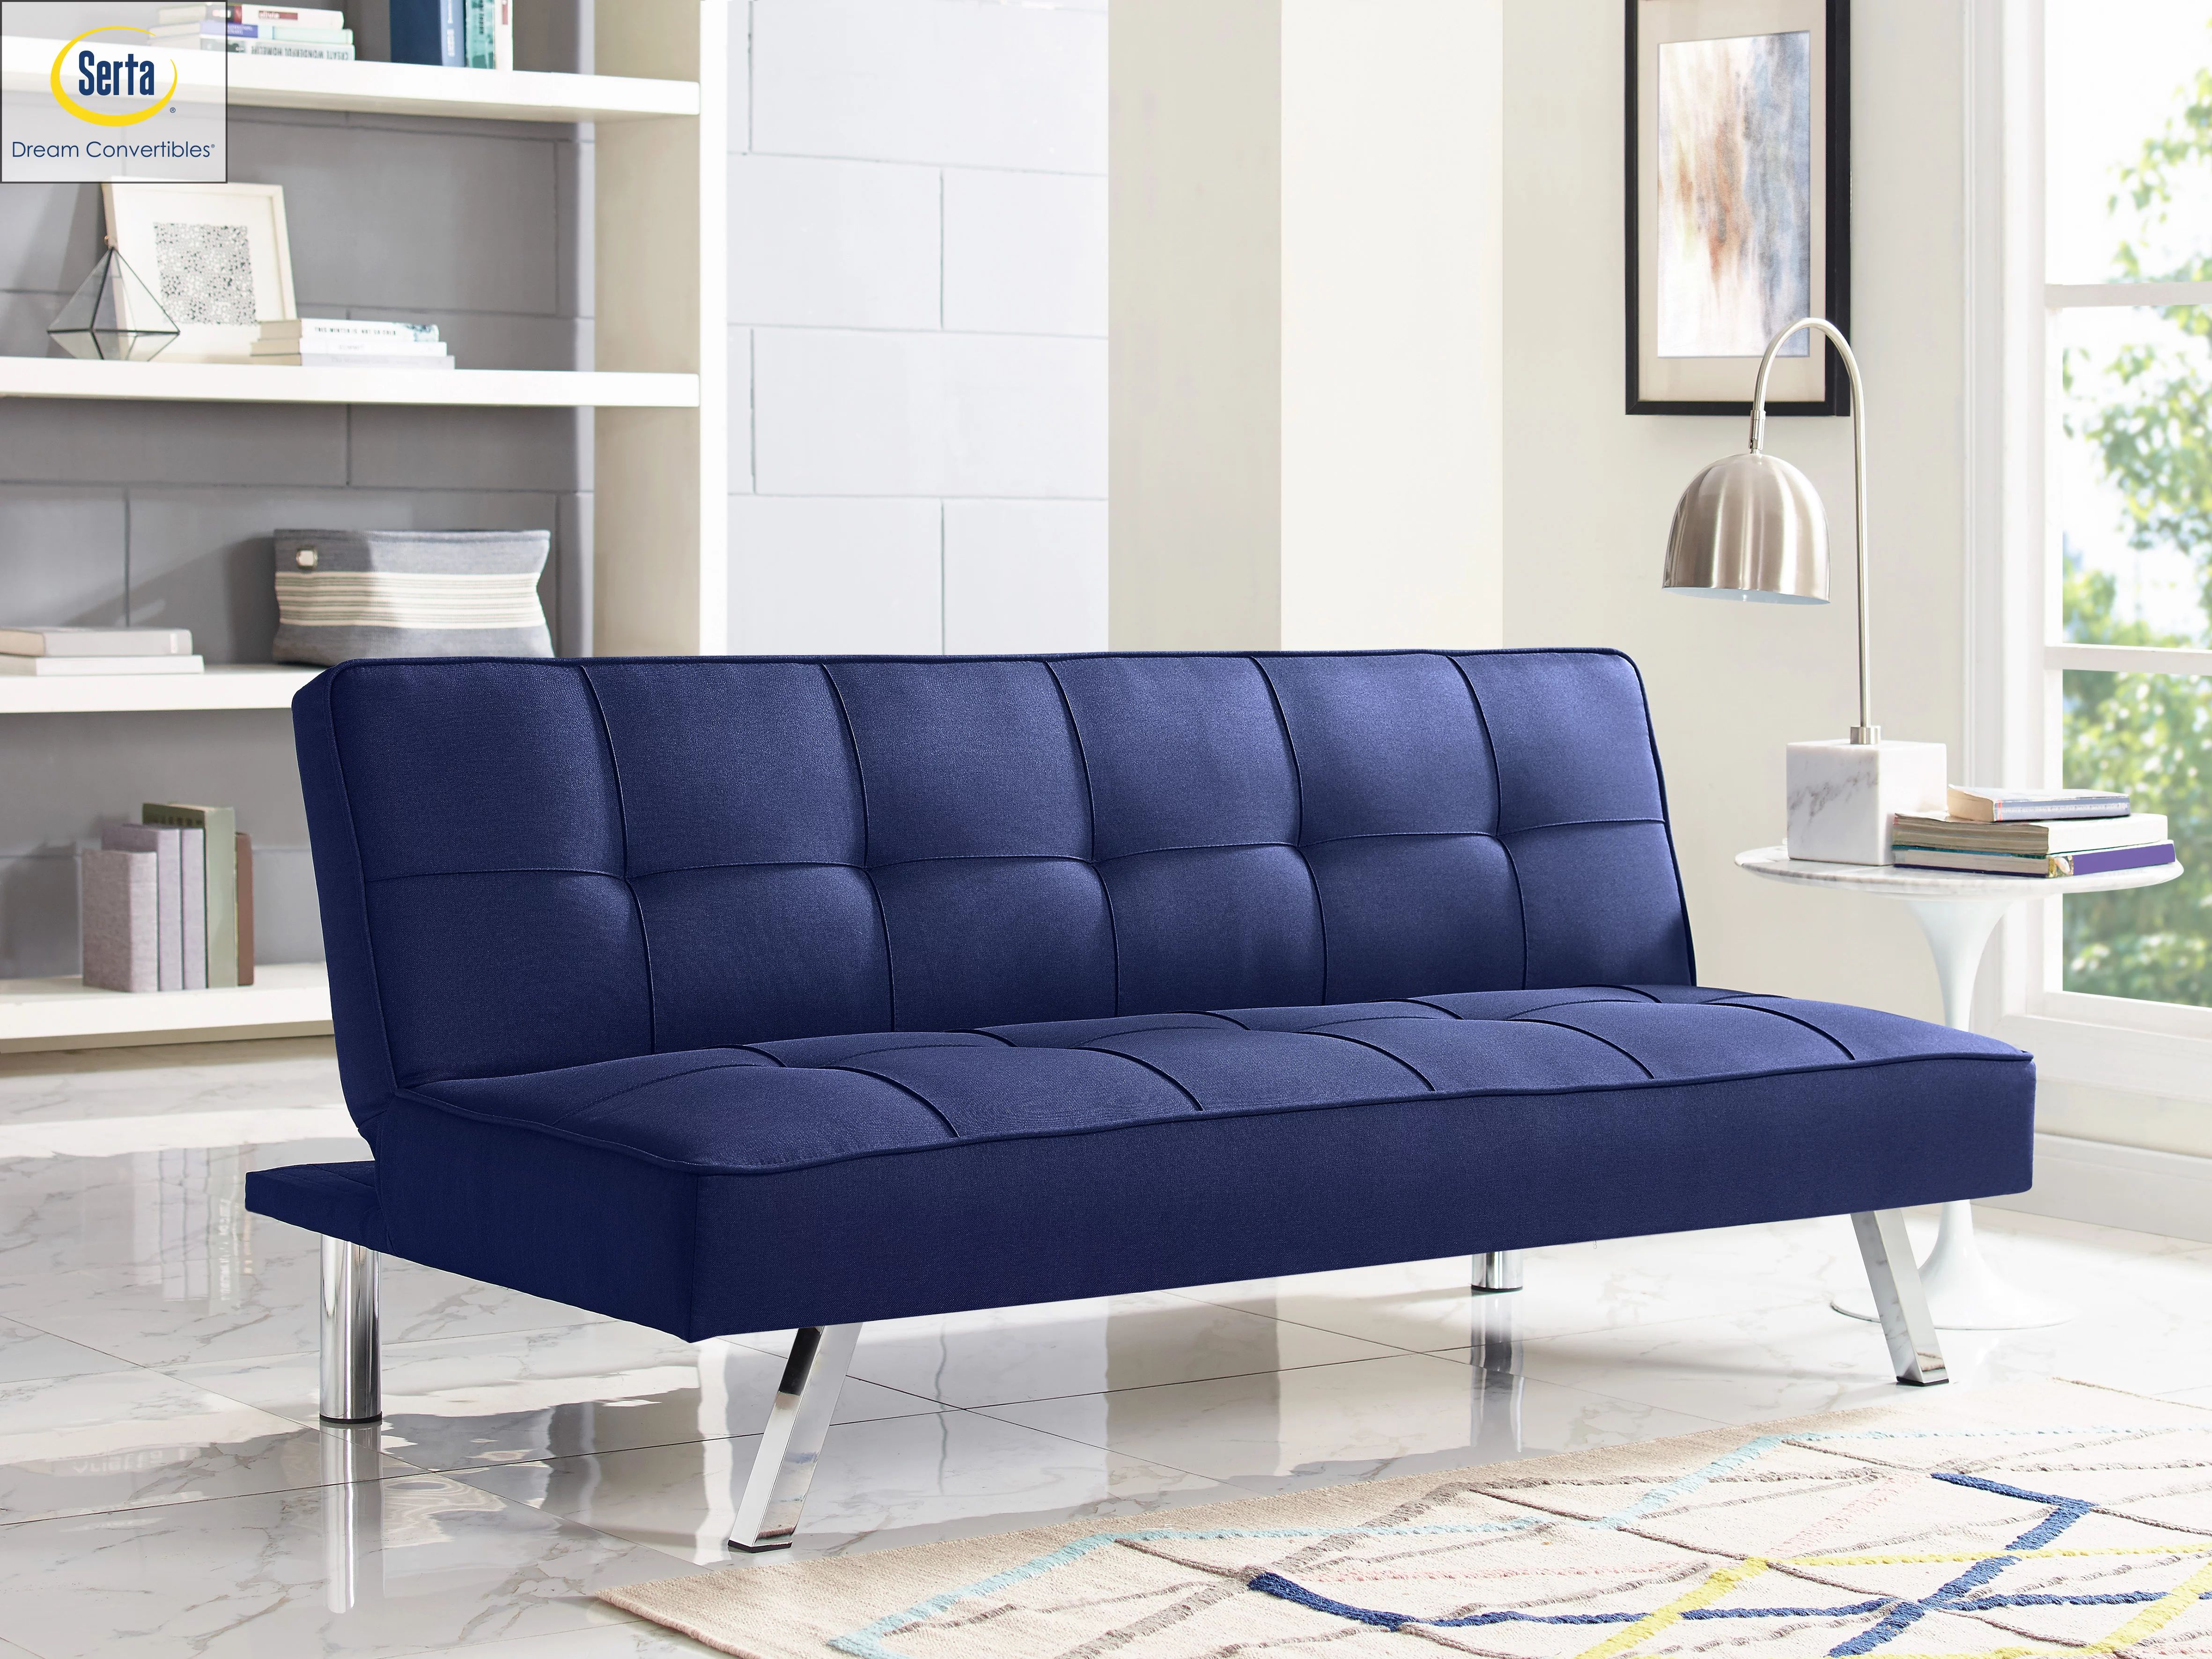 Serta Chelsea 3-Seat Multi-function Upholstery Fabric Sofa, Navy Blue | Walmart (US)